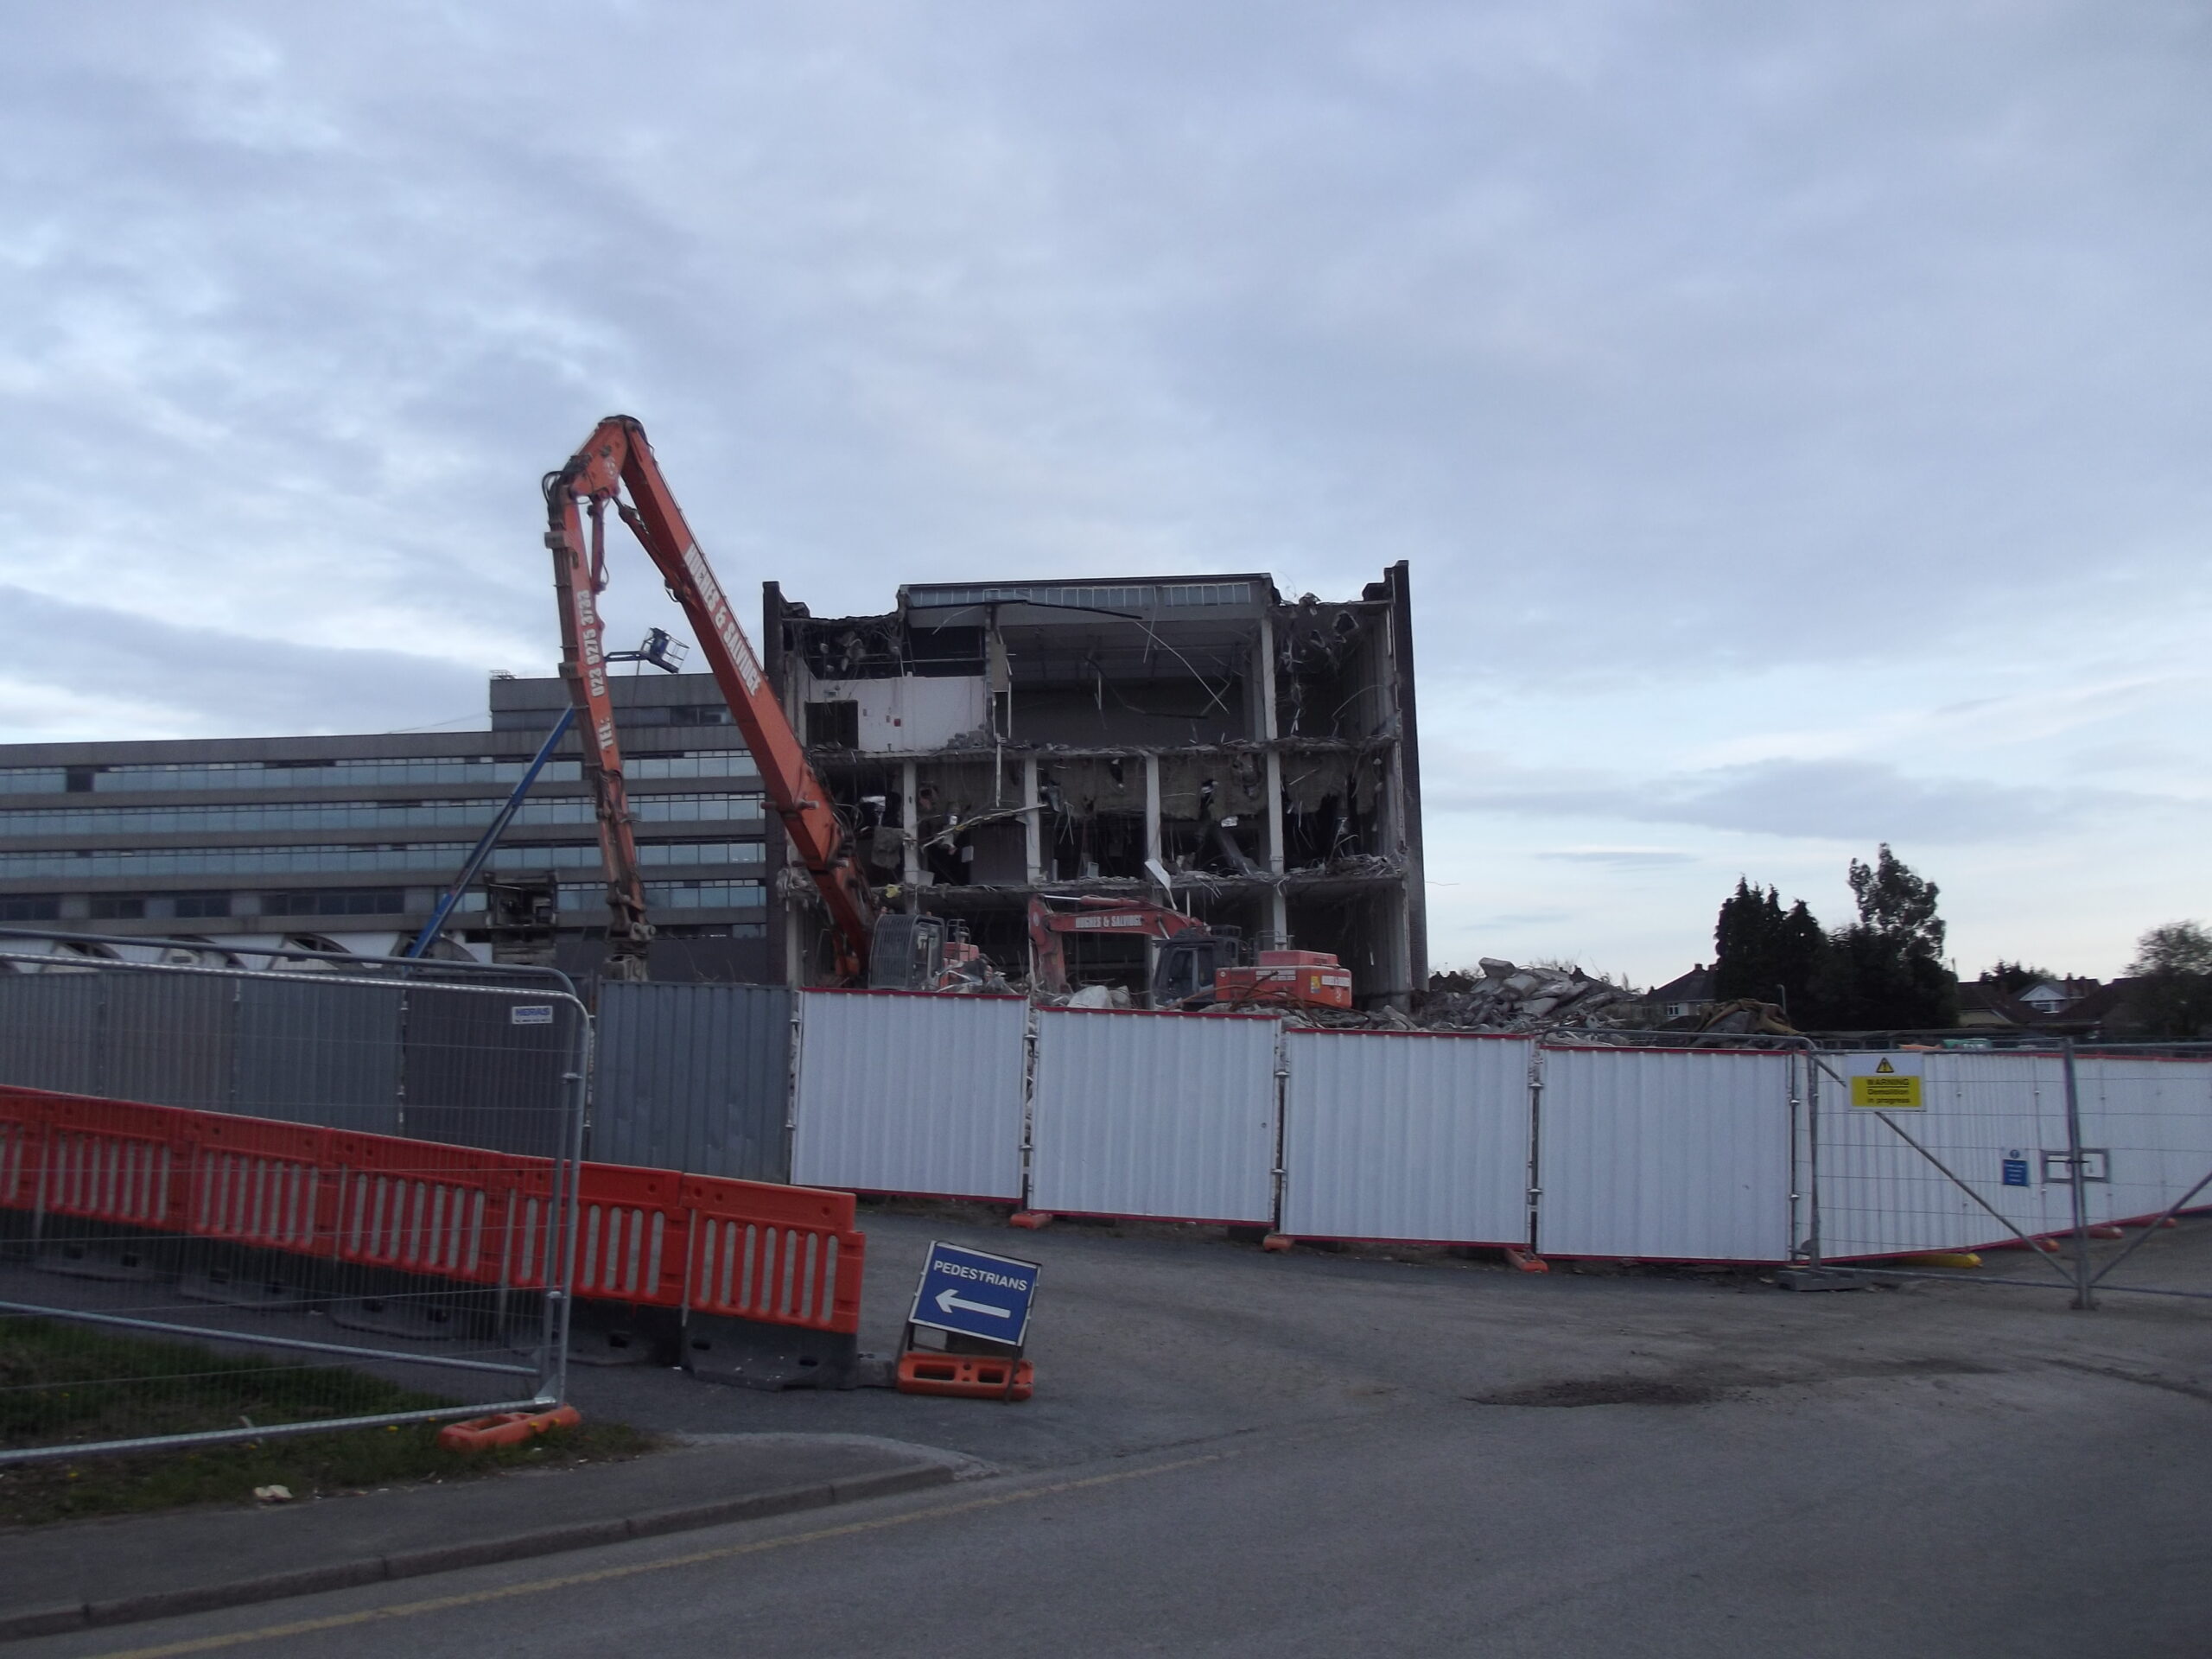 West Block demolition, 16 Apr 2012